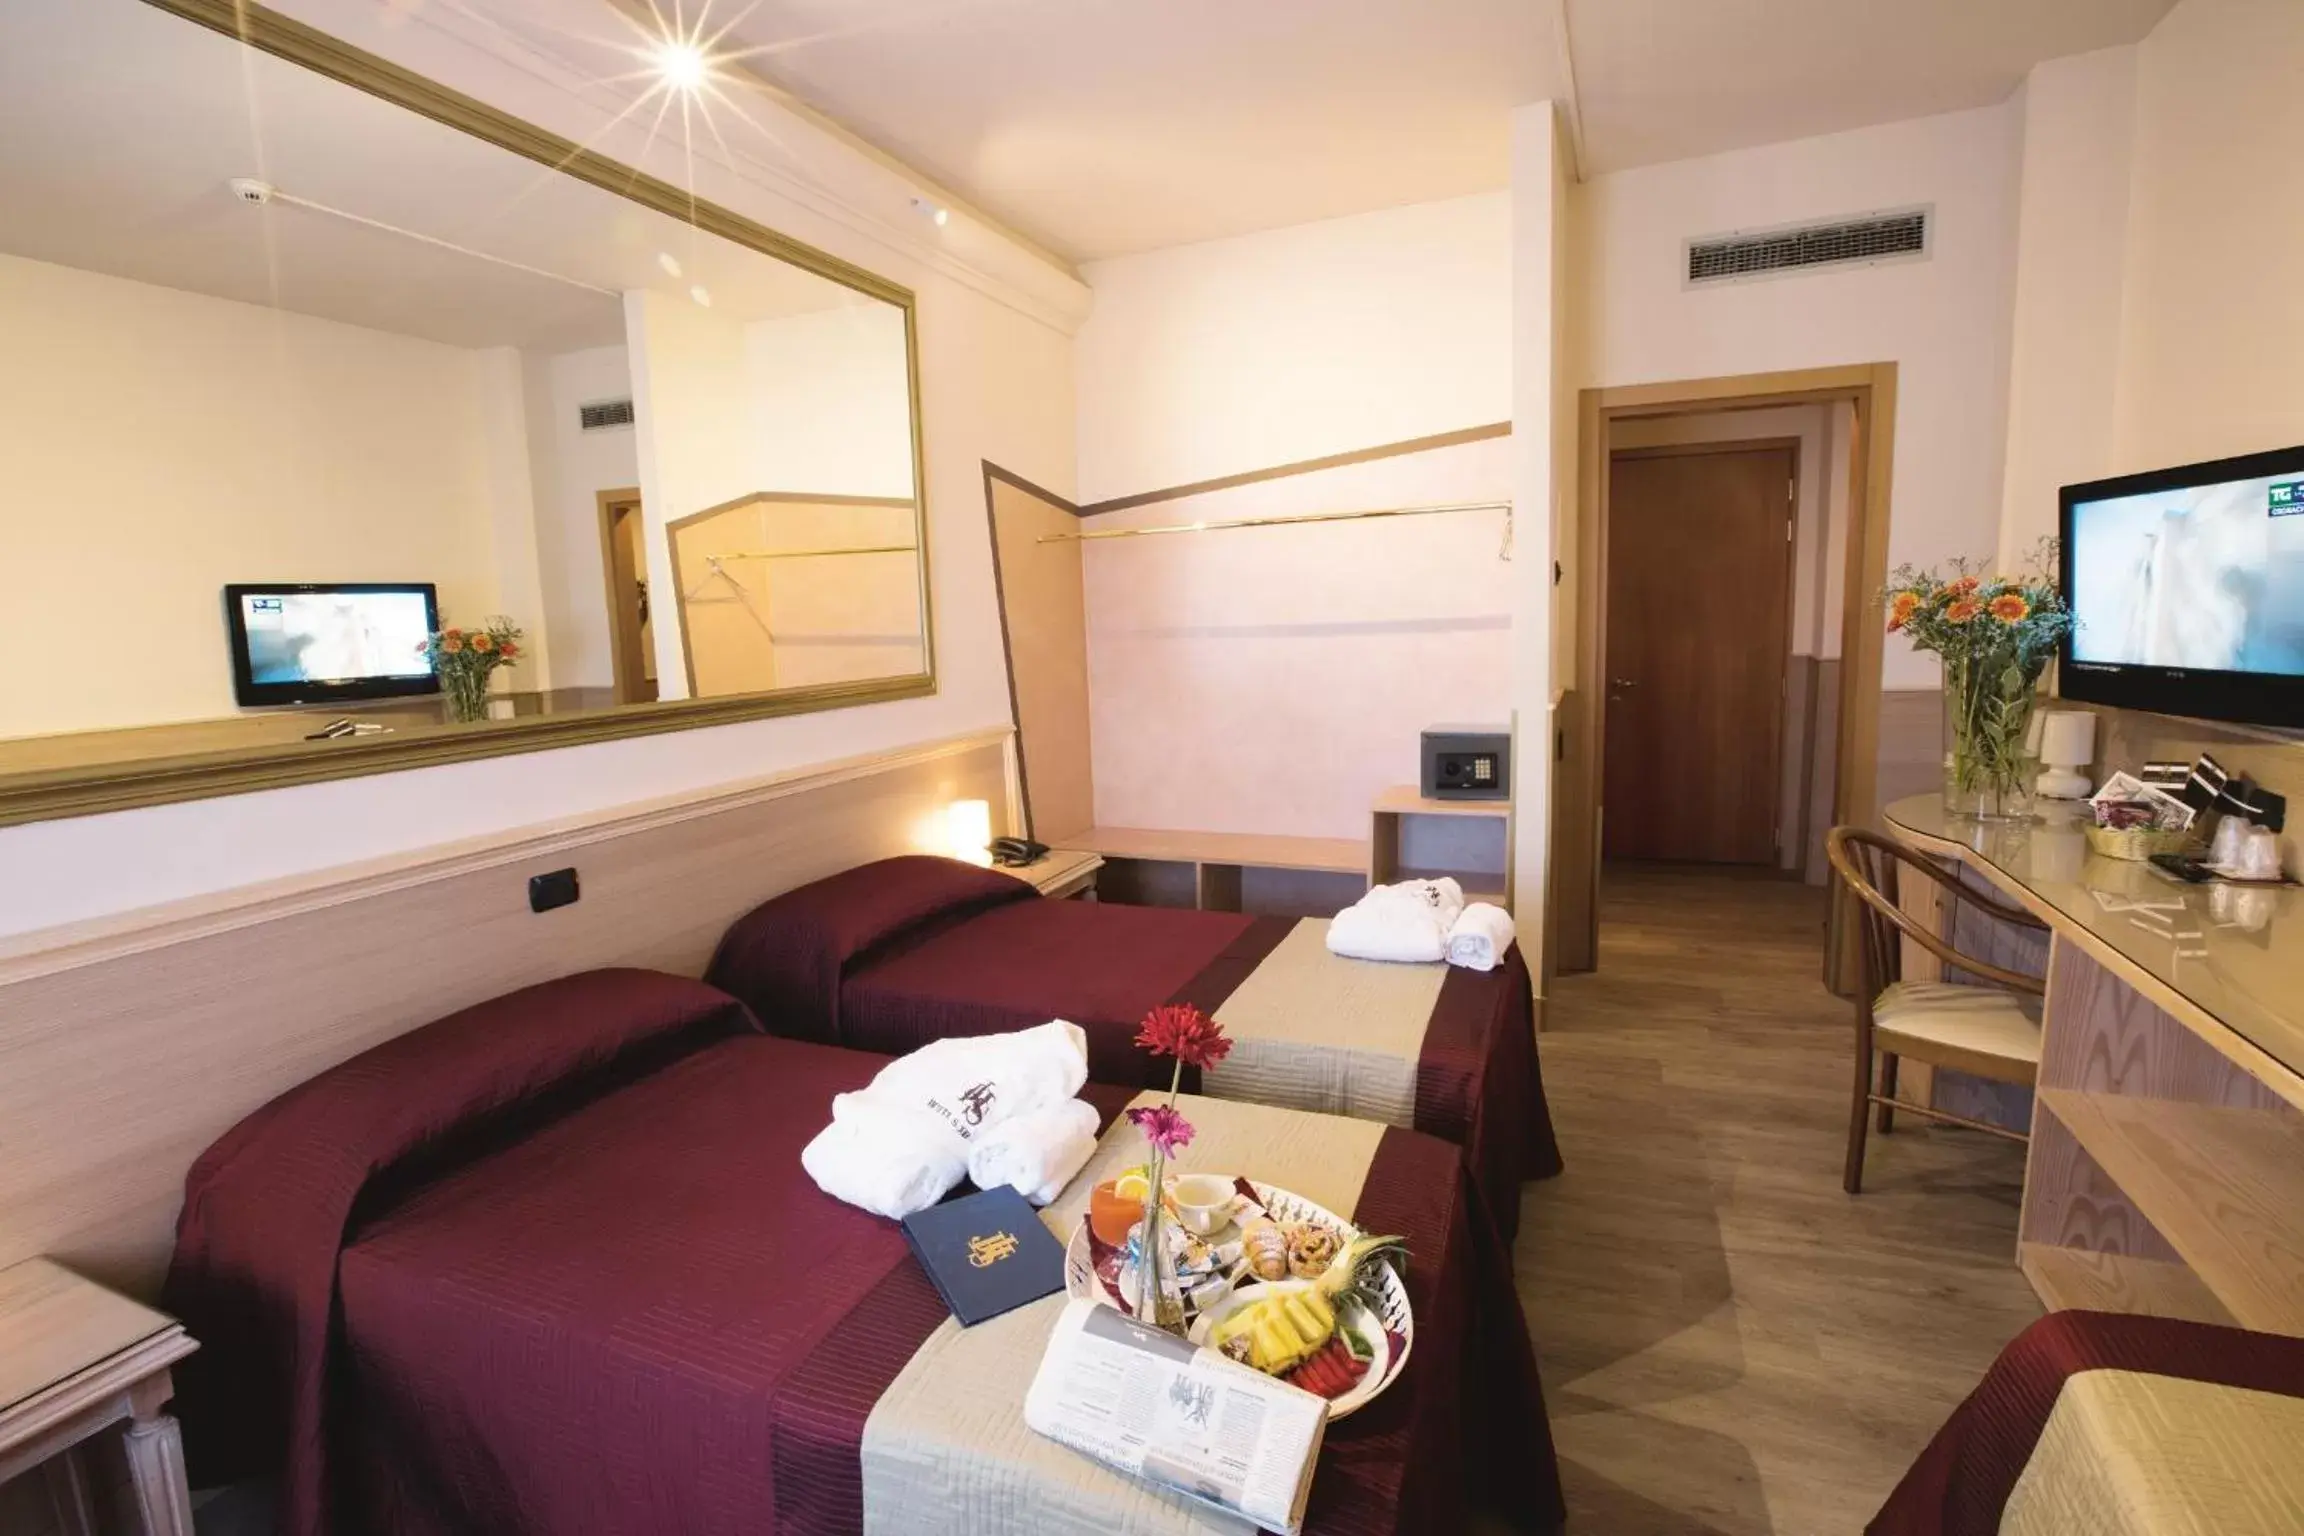 Bed, Room Photo in iH Hotels Milano St. John